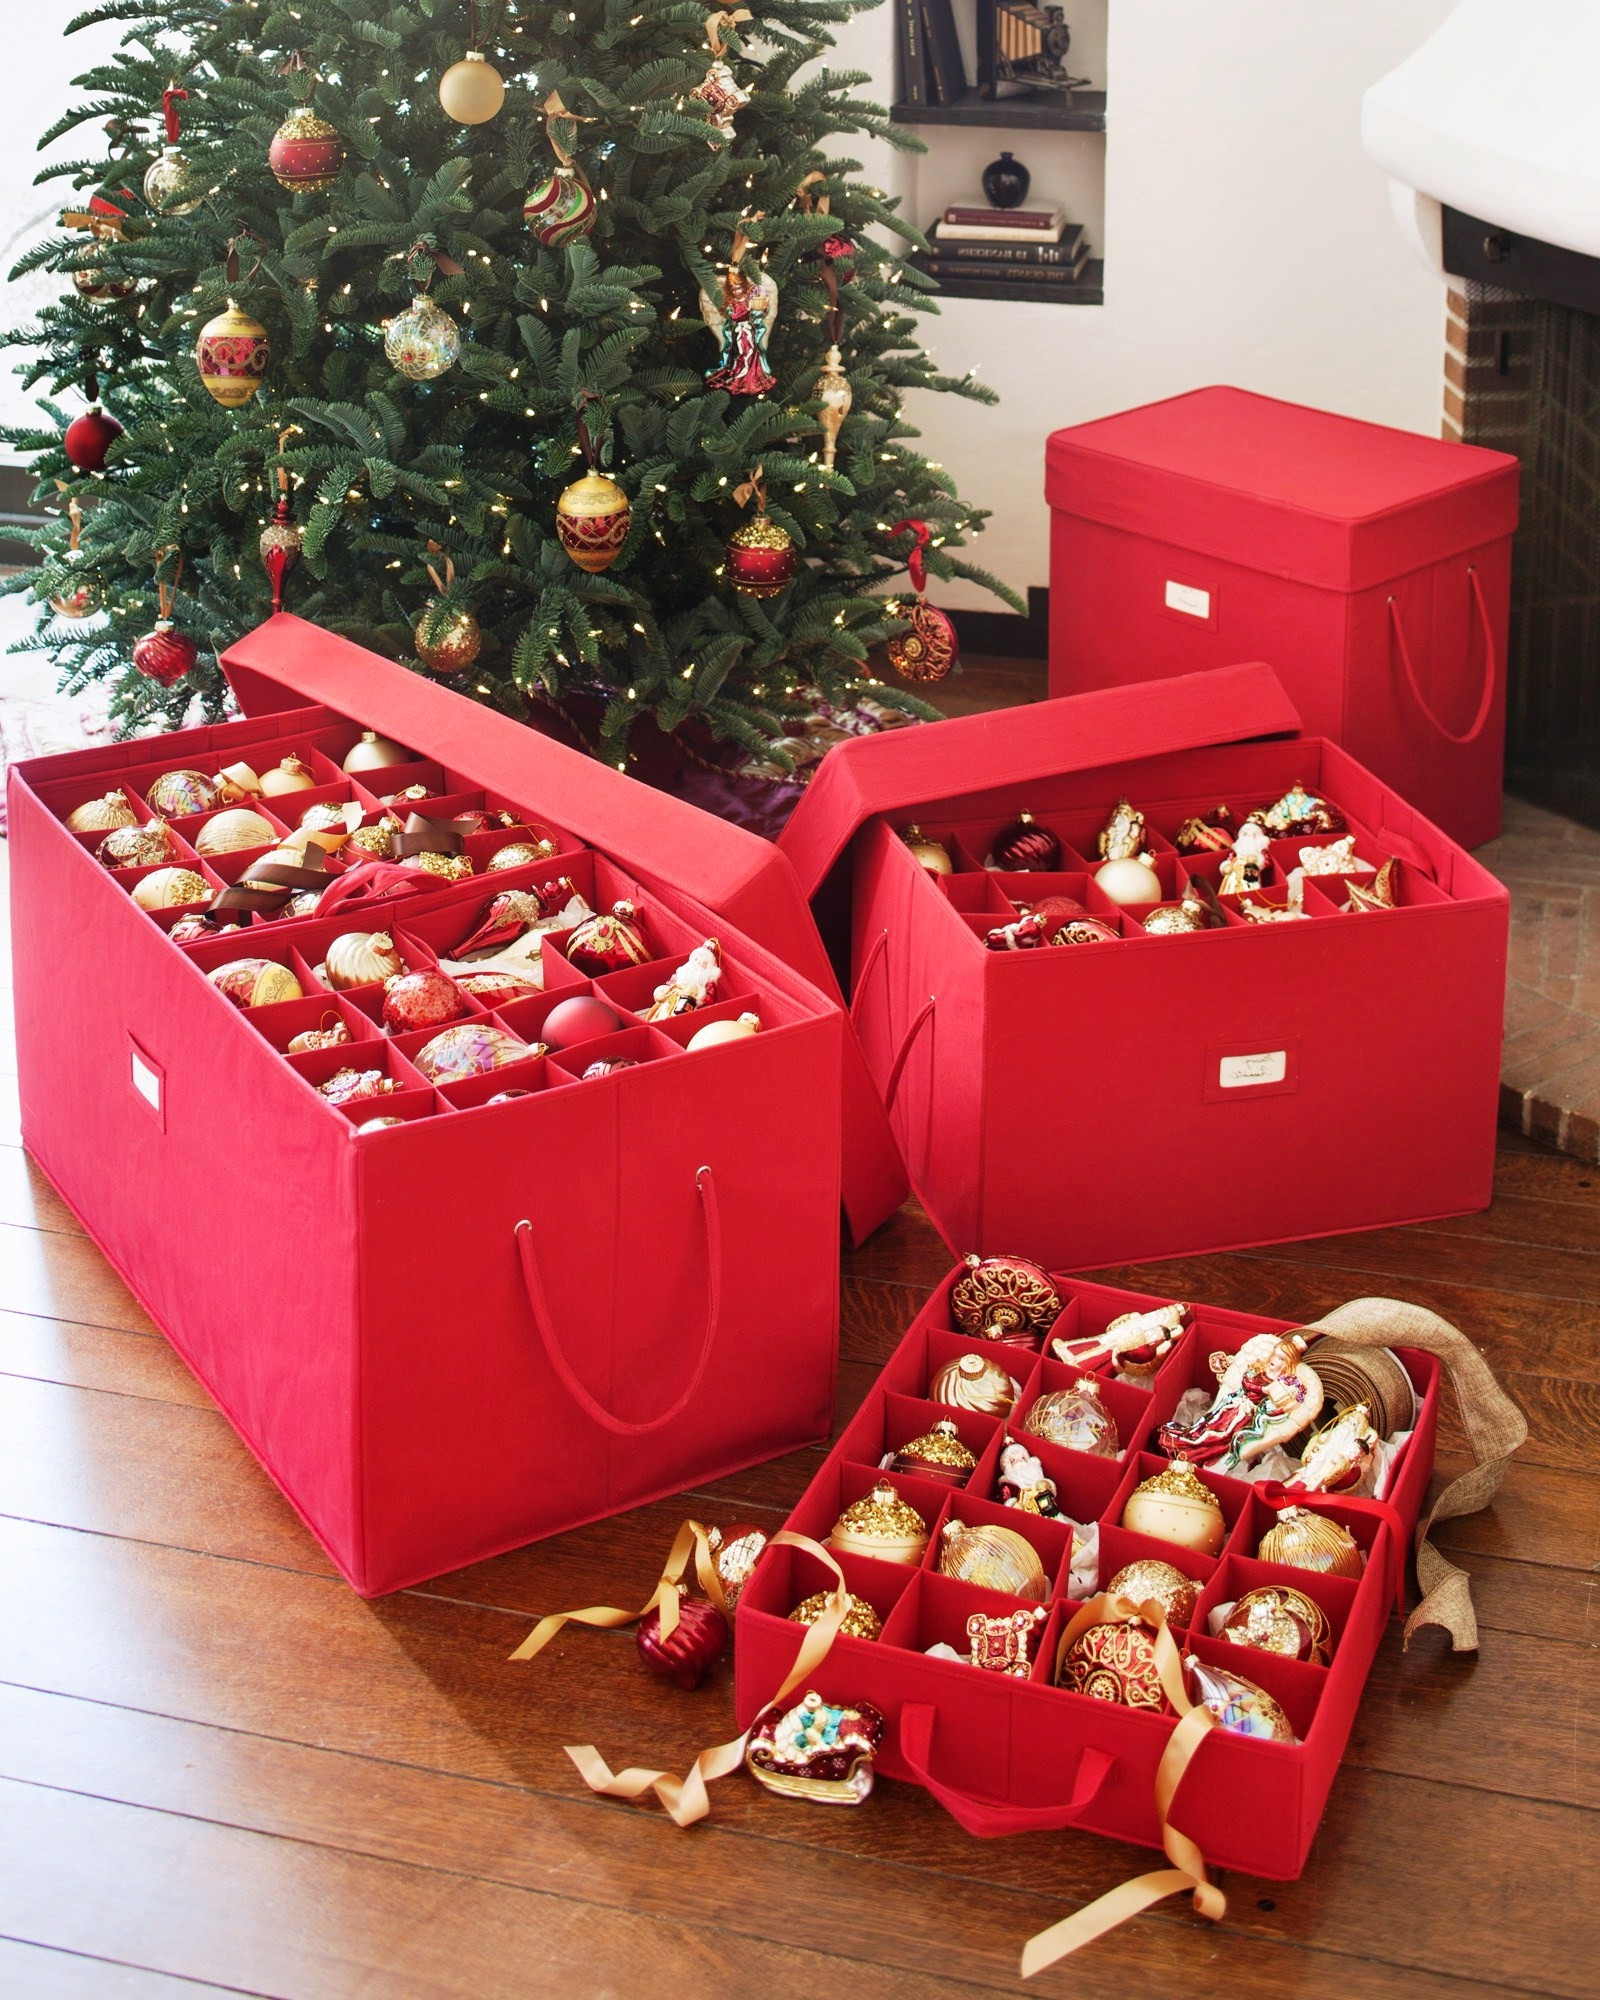 Rubbermaid Christmas Ornament Storage
 Adjustable Ornament Storage Box